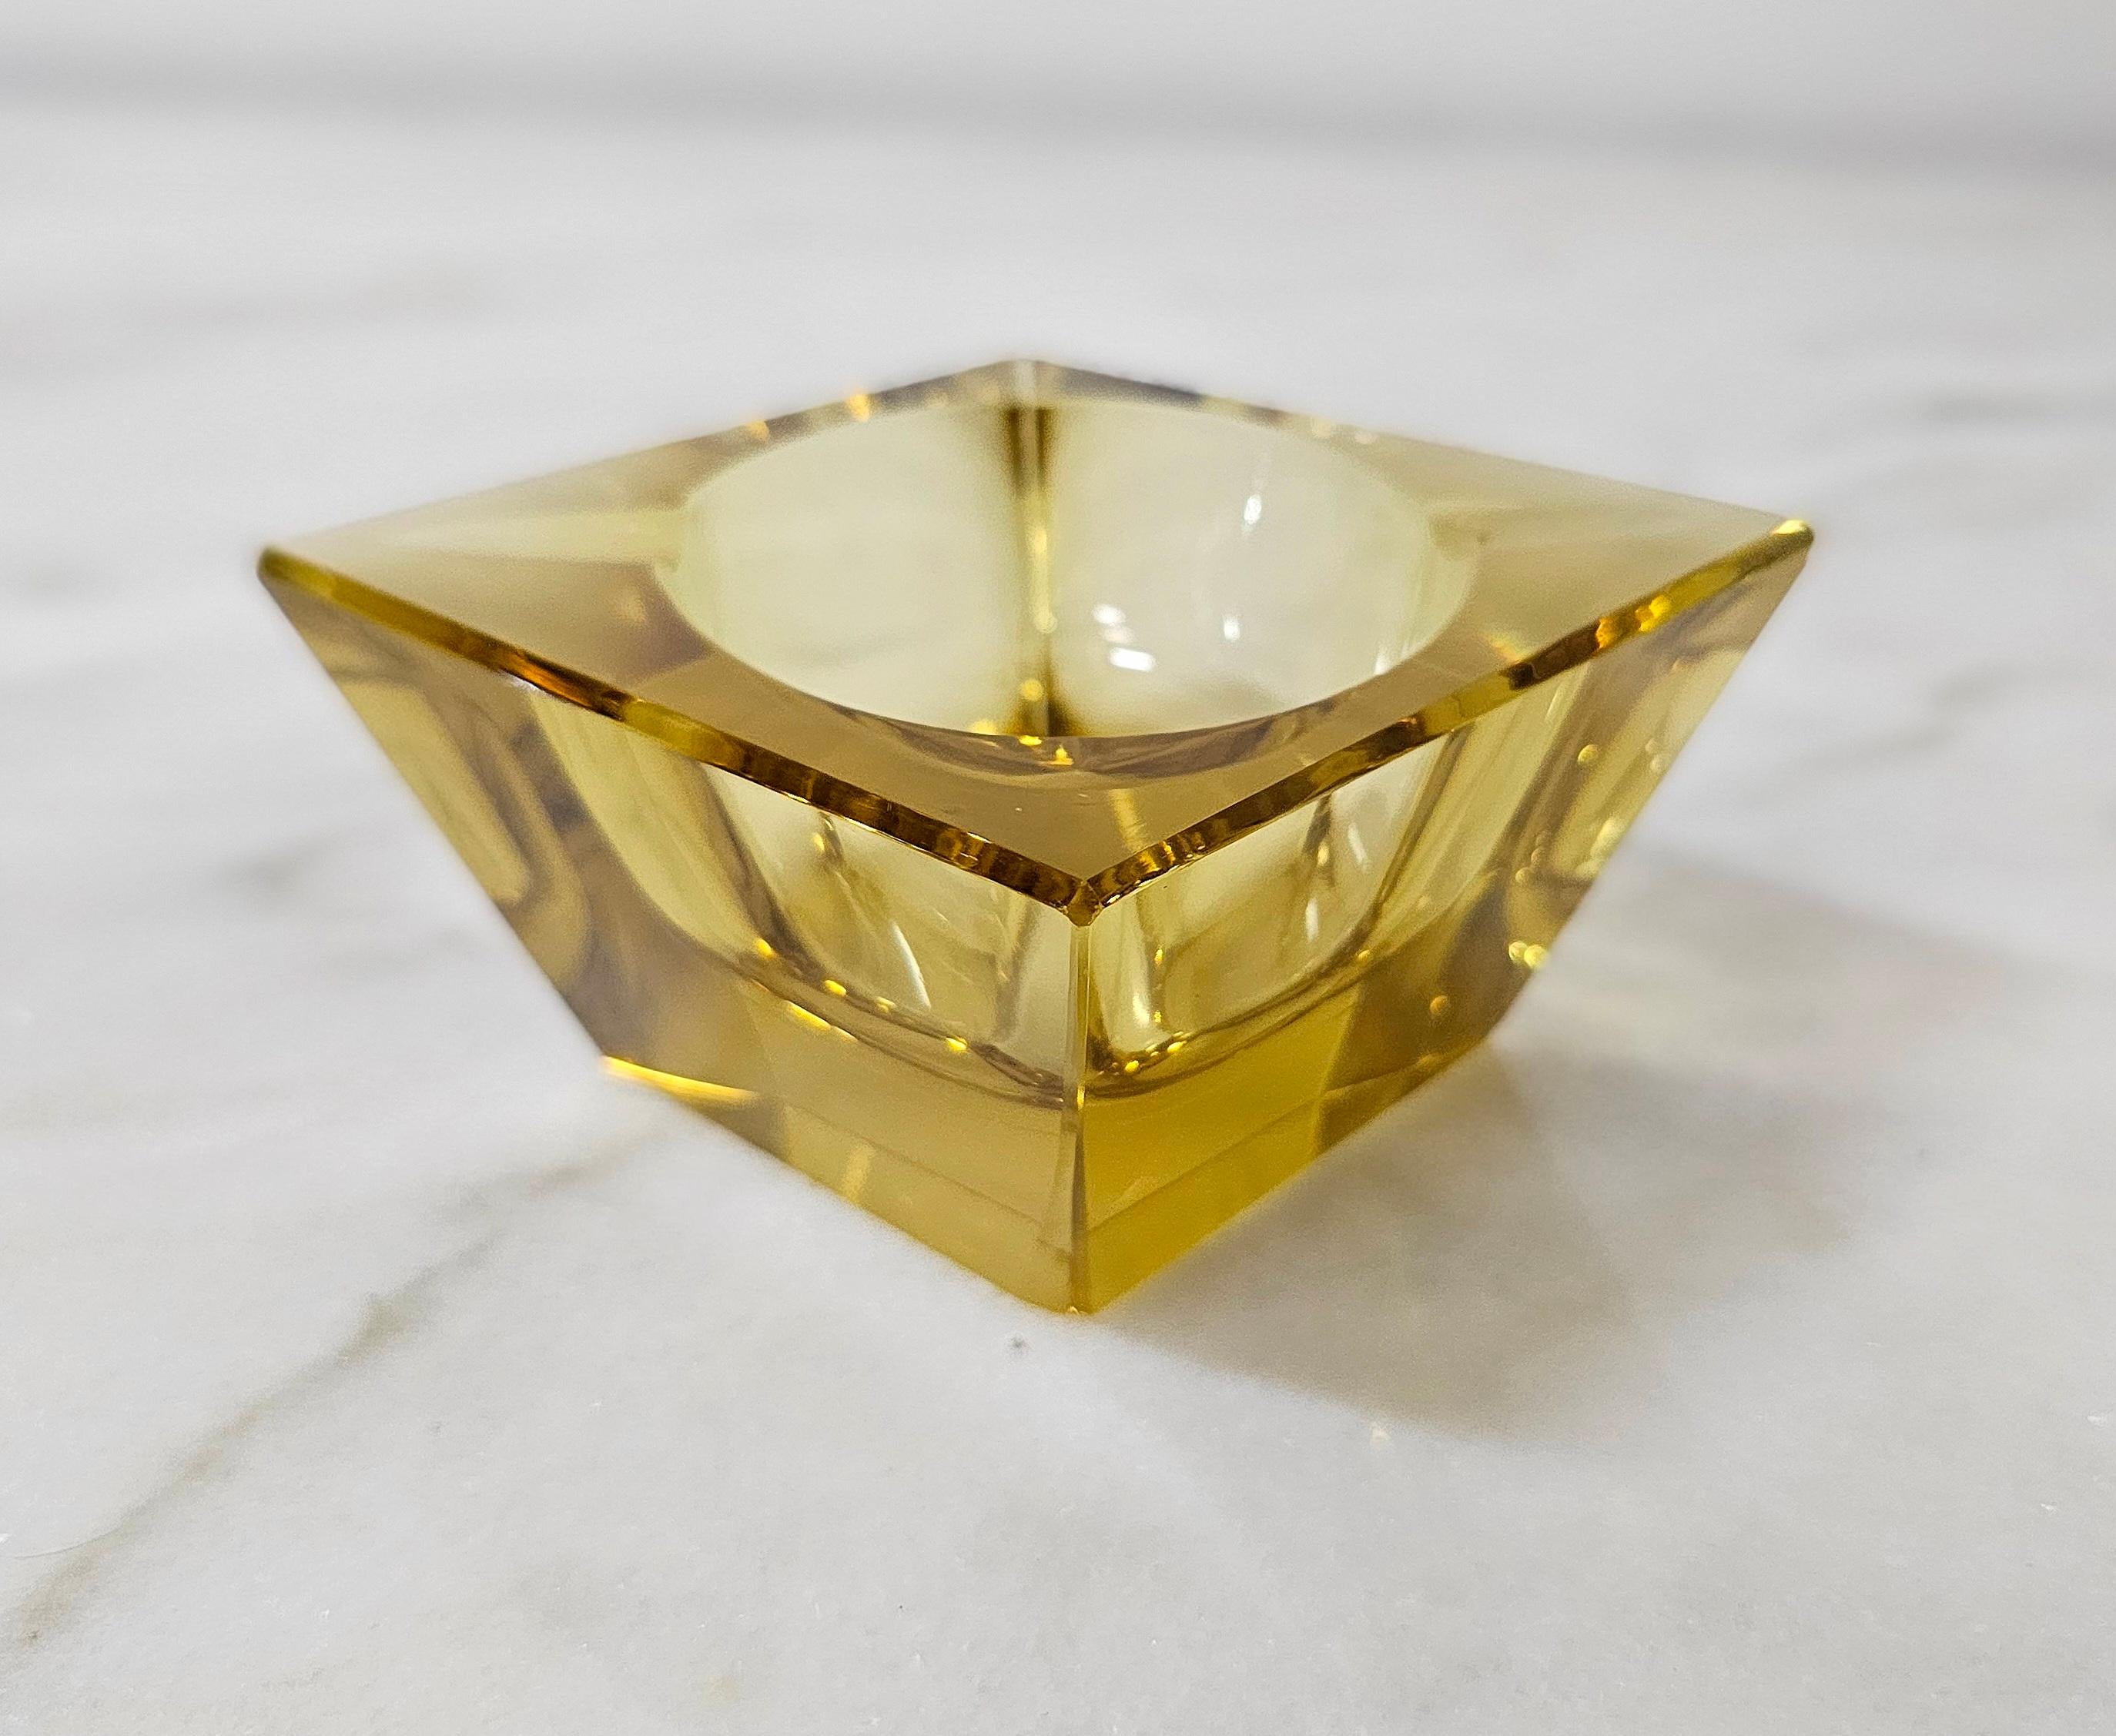 Ashtray Flavio Poli Murano Glass Midcentury Modern Italian Design 1960s For Sale 3